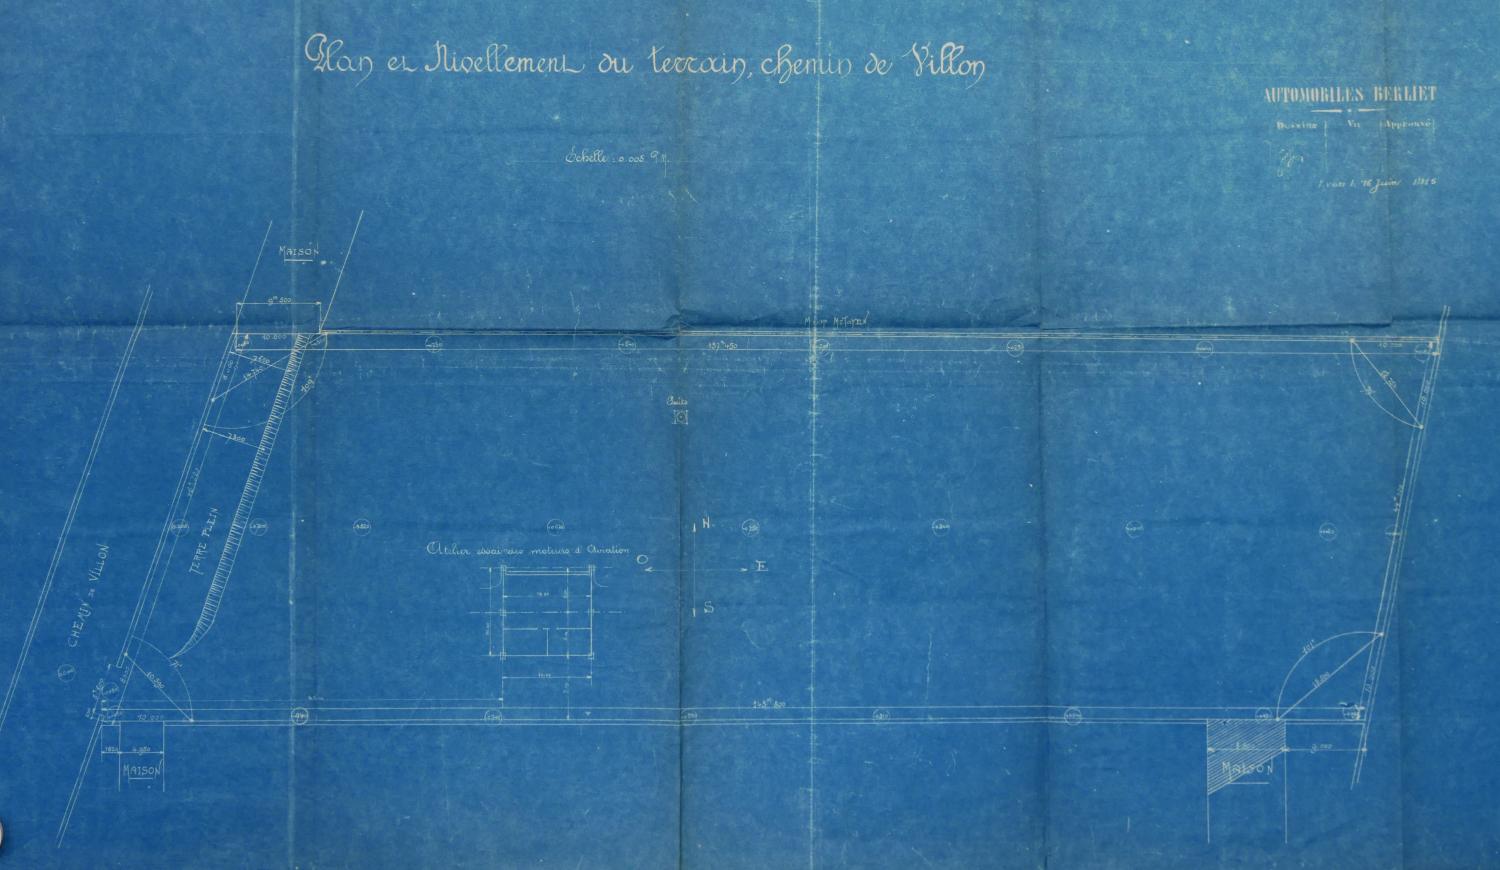 Plan usine Berliet 1915 :  plan de nivellement de terrain (ACL : 314564-154)